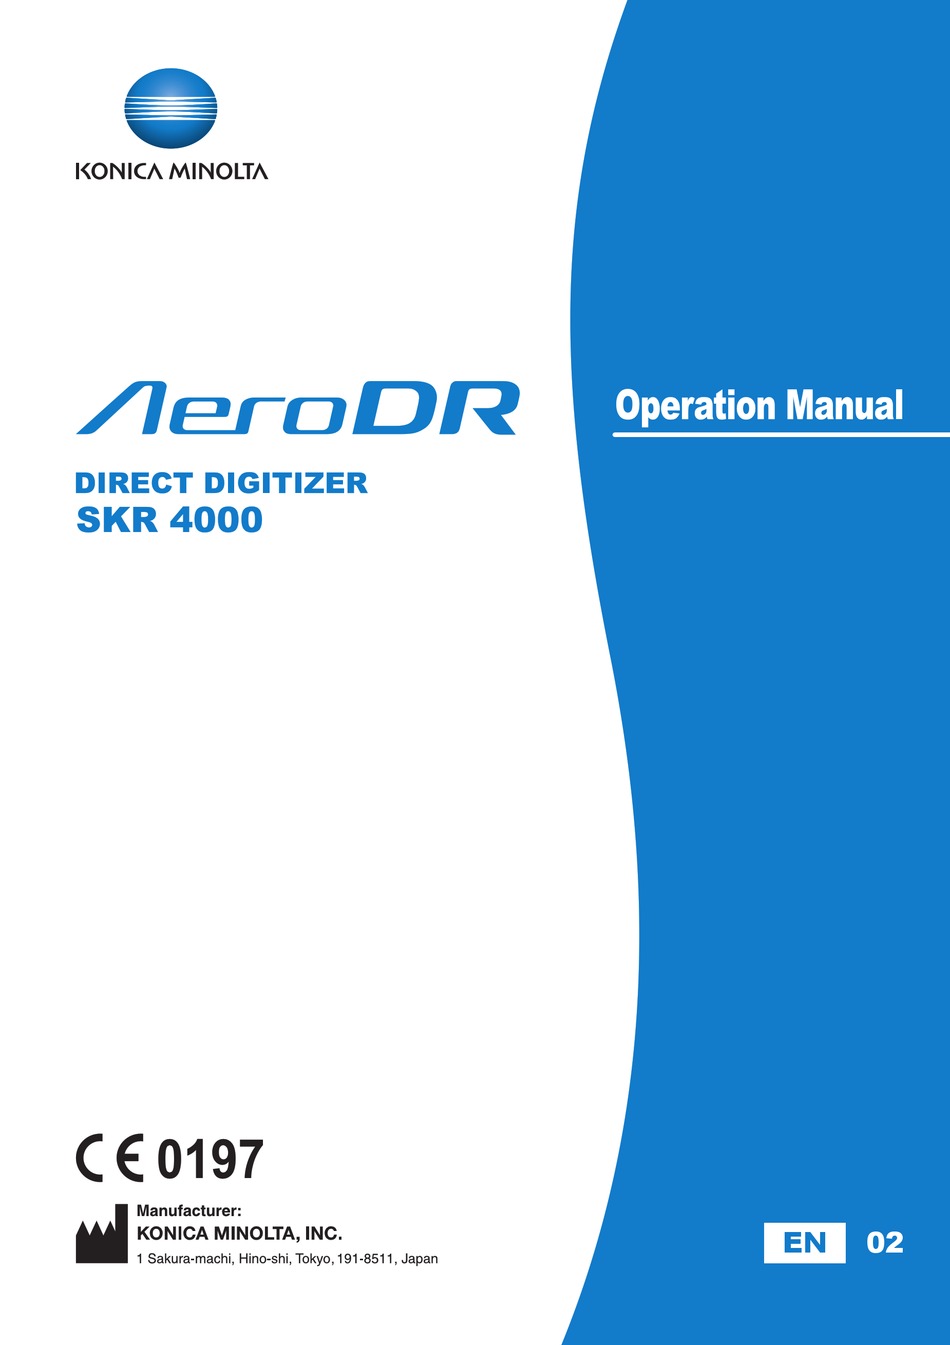 Konica Minolta Aerodr Skr 4000 Operation Manual Pdf Download Manualslib